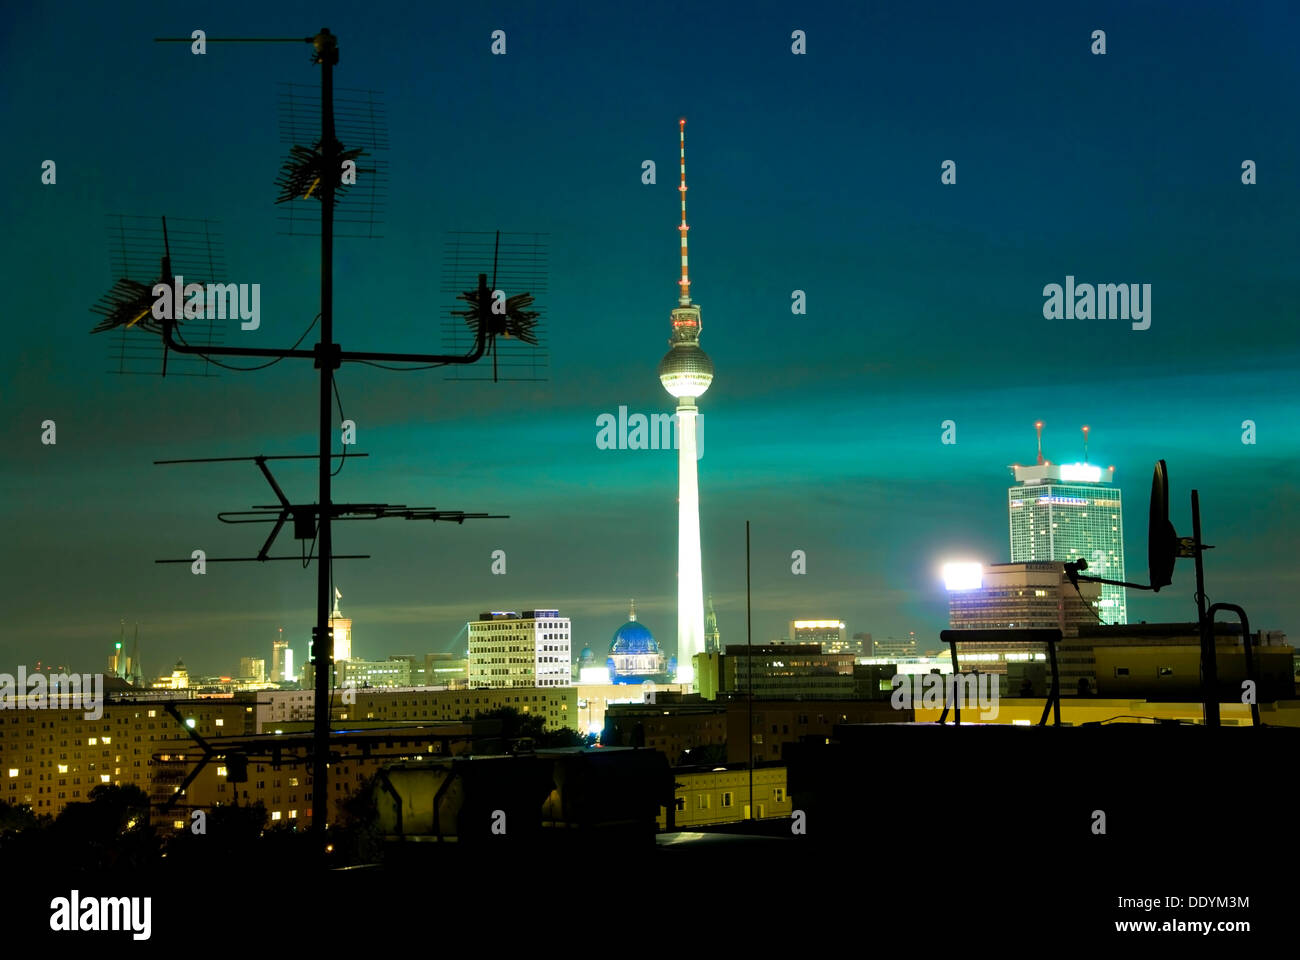 TV Tower at night, Alexanderplatz square, Berlin Stock Photo